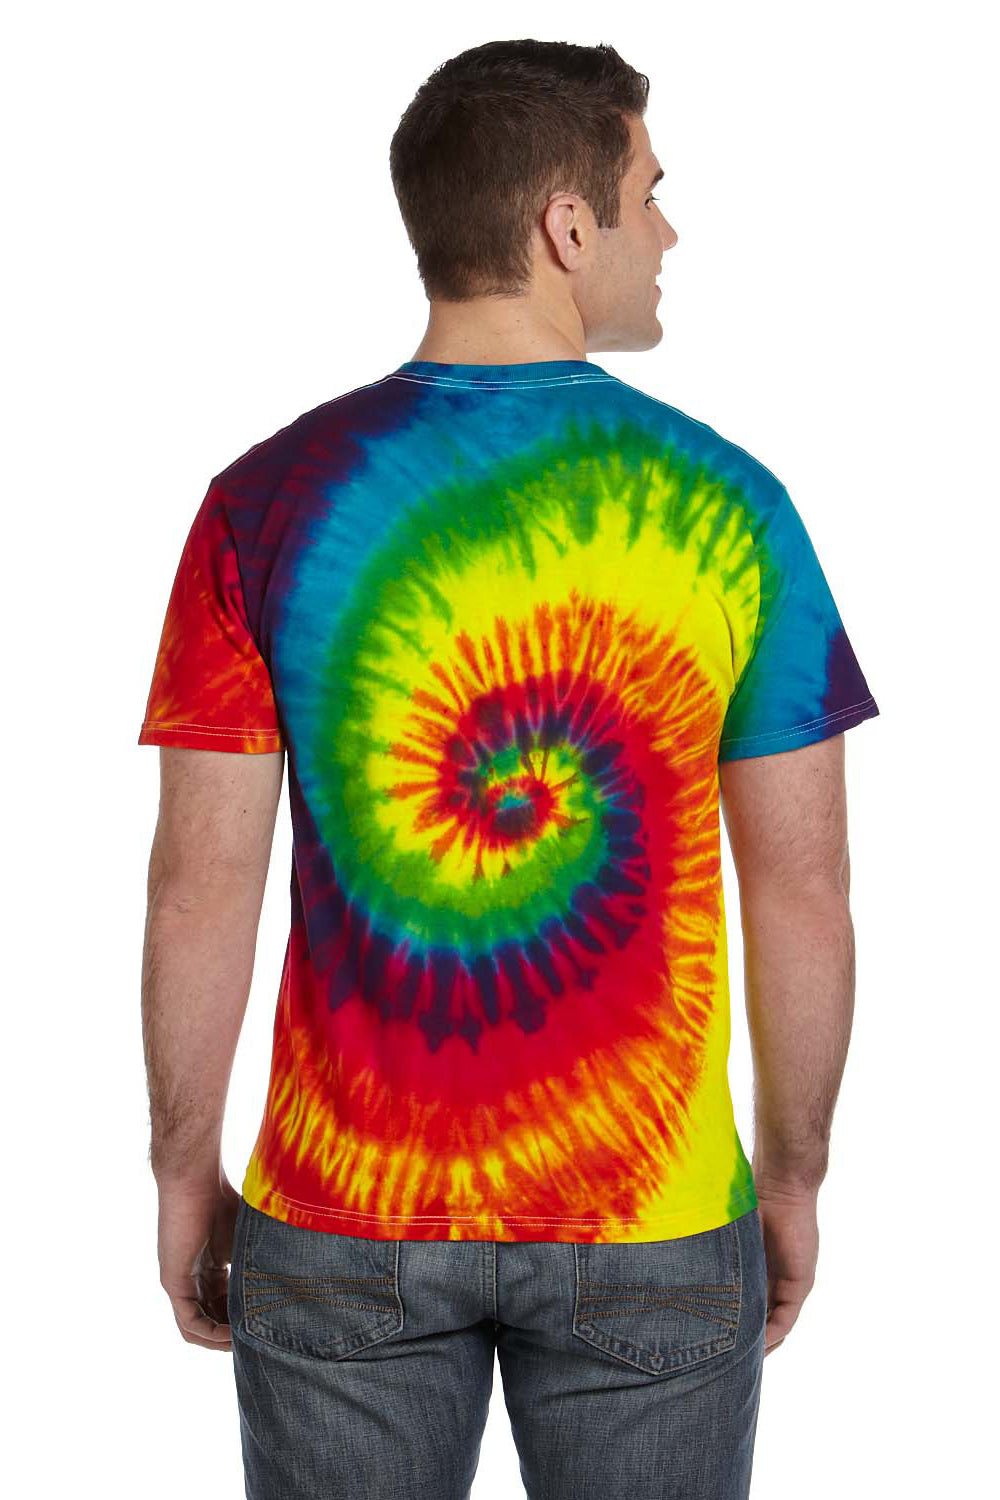 Tie-Dye CD100 Mens Short Sleeve Crewneck T-Shirt Reactive Rainbow Back